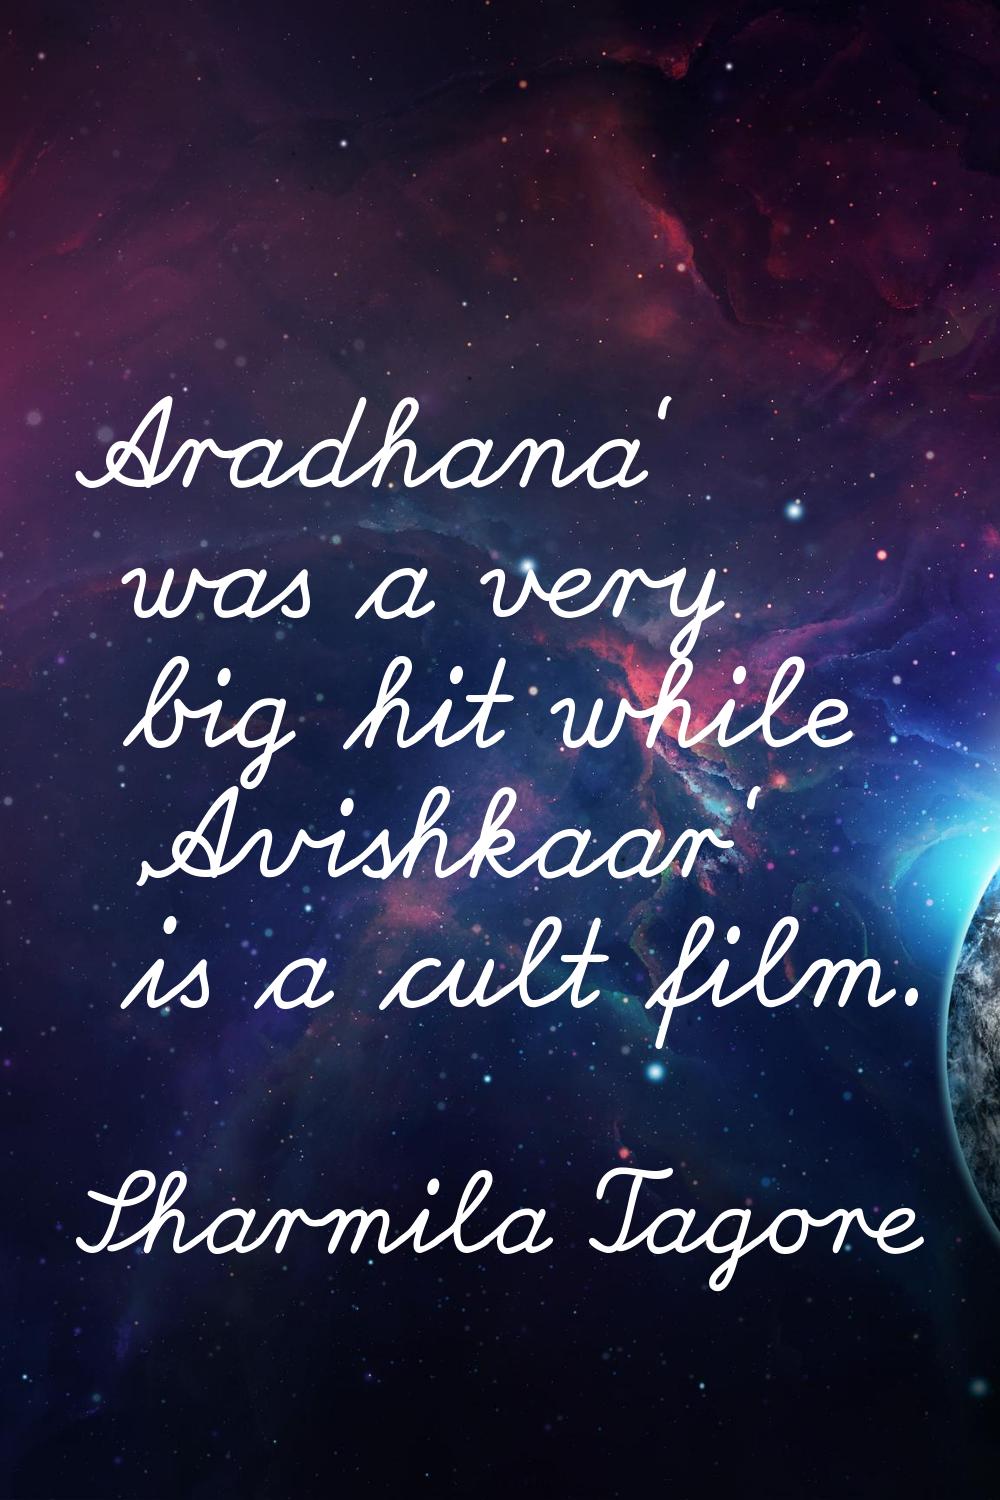 Aradhana' was a very big hit while 'Avishkaar' is a cult film.